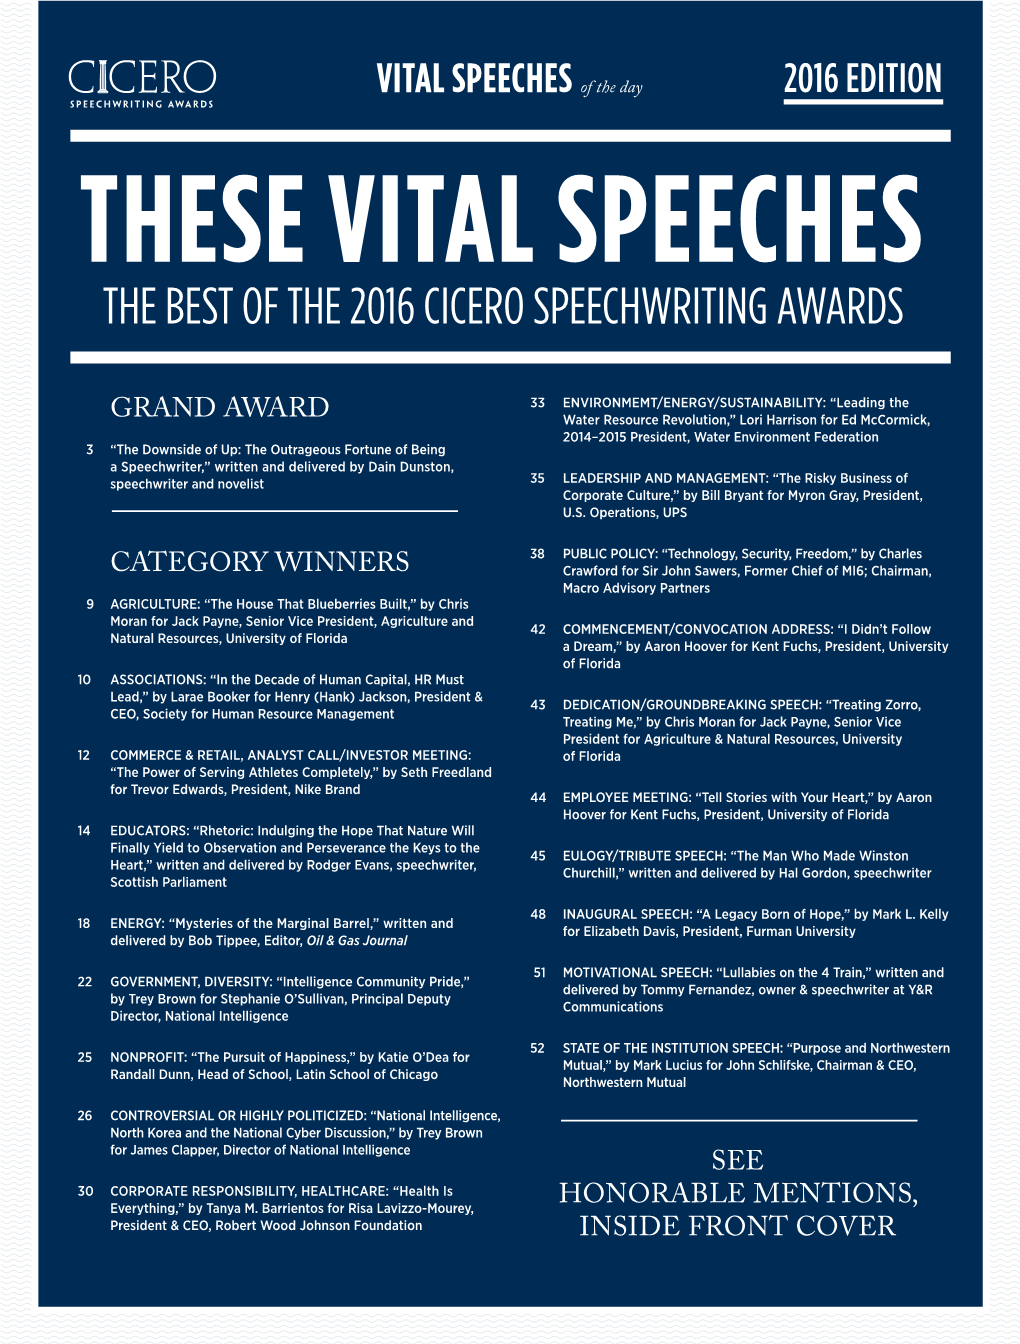 The Best of the 2016 Cicero Speechwriting Awards